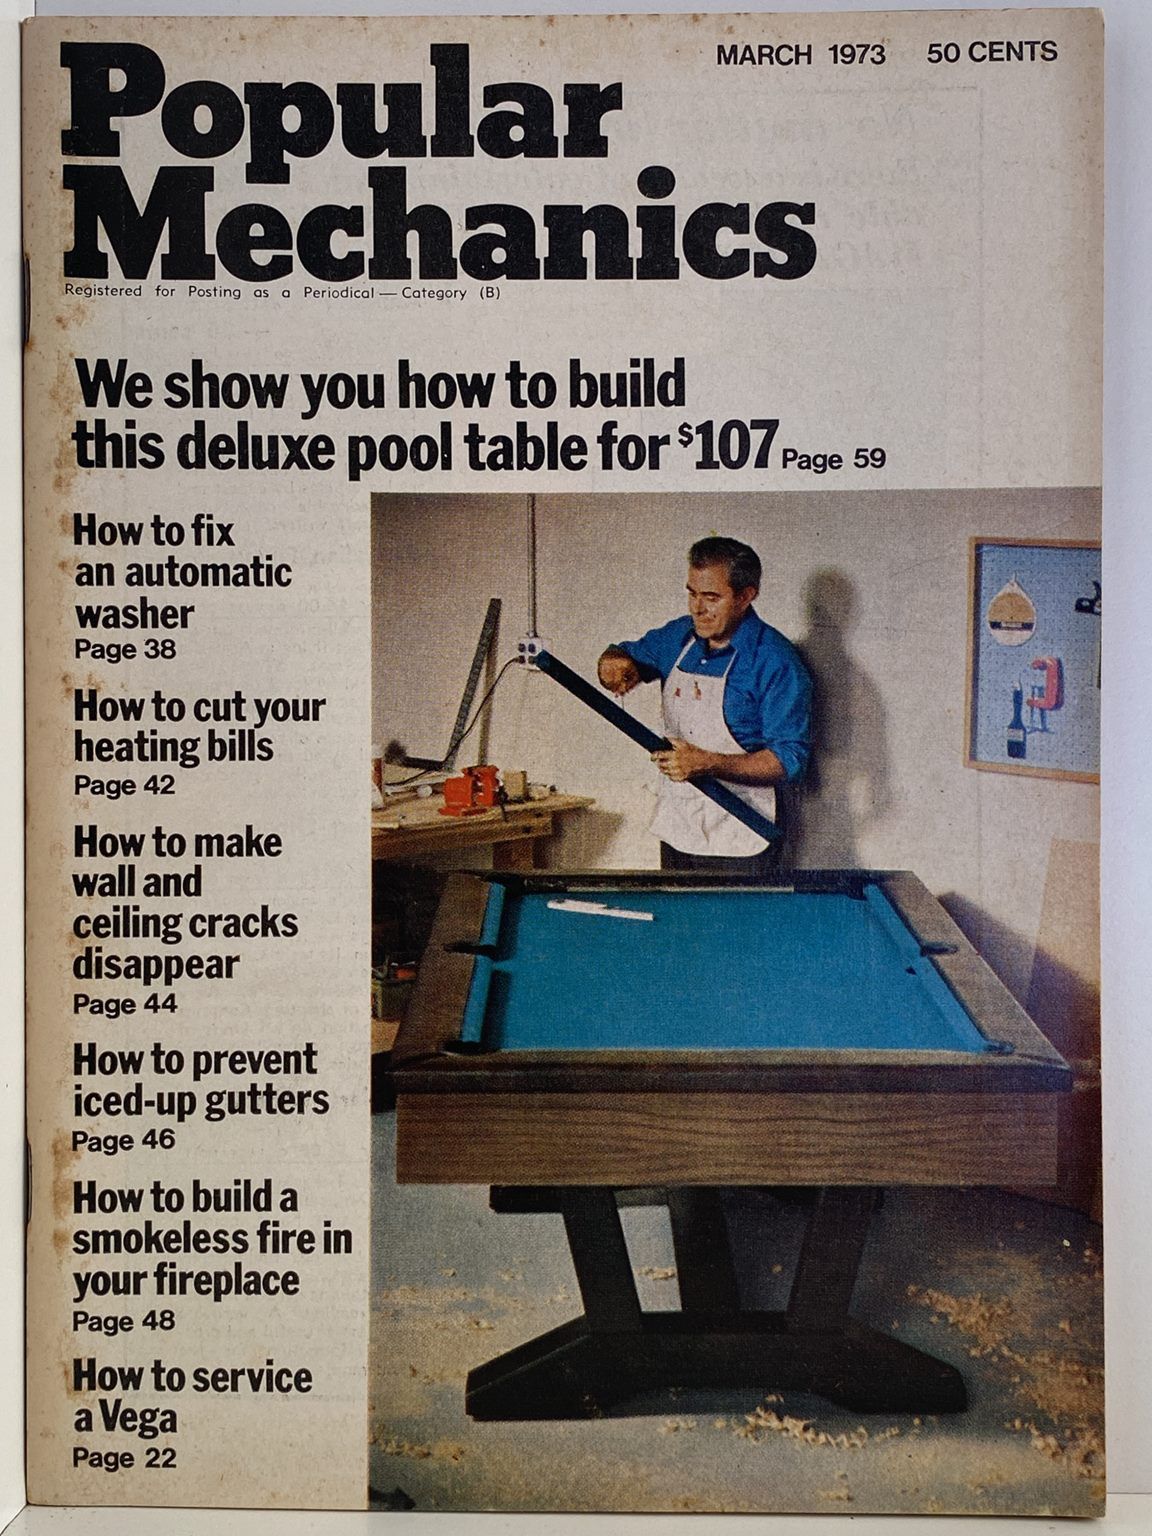 VINTAGE MAGAZINE: Popular Mechanics - Vol. 139, No. 1 - March 1973